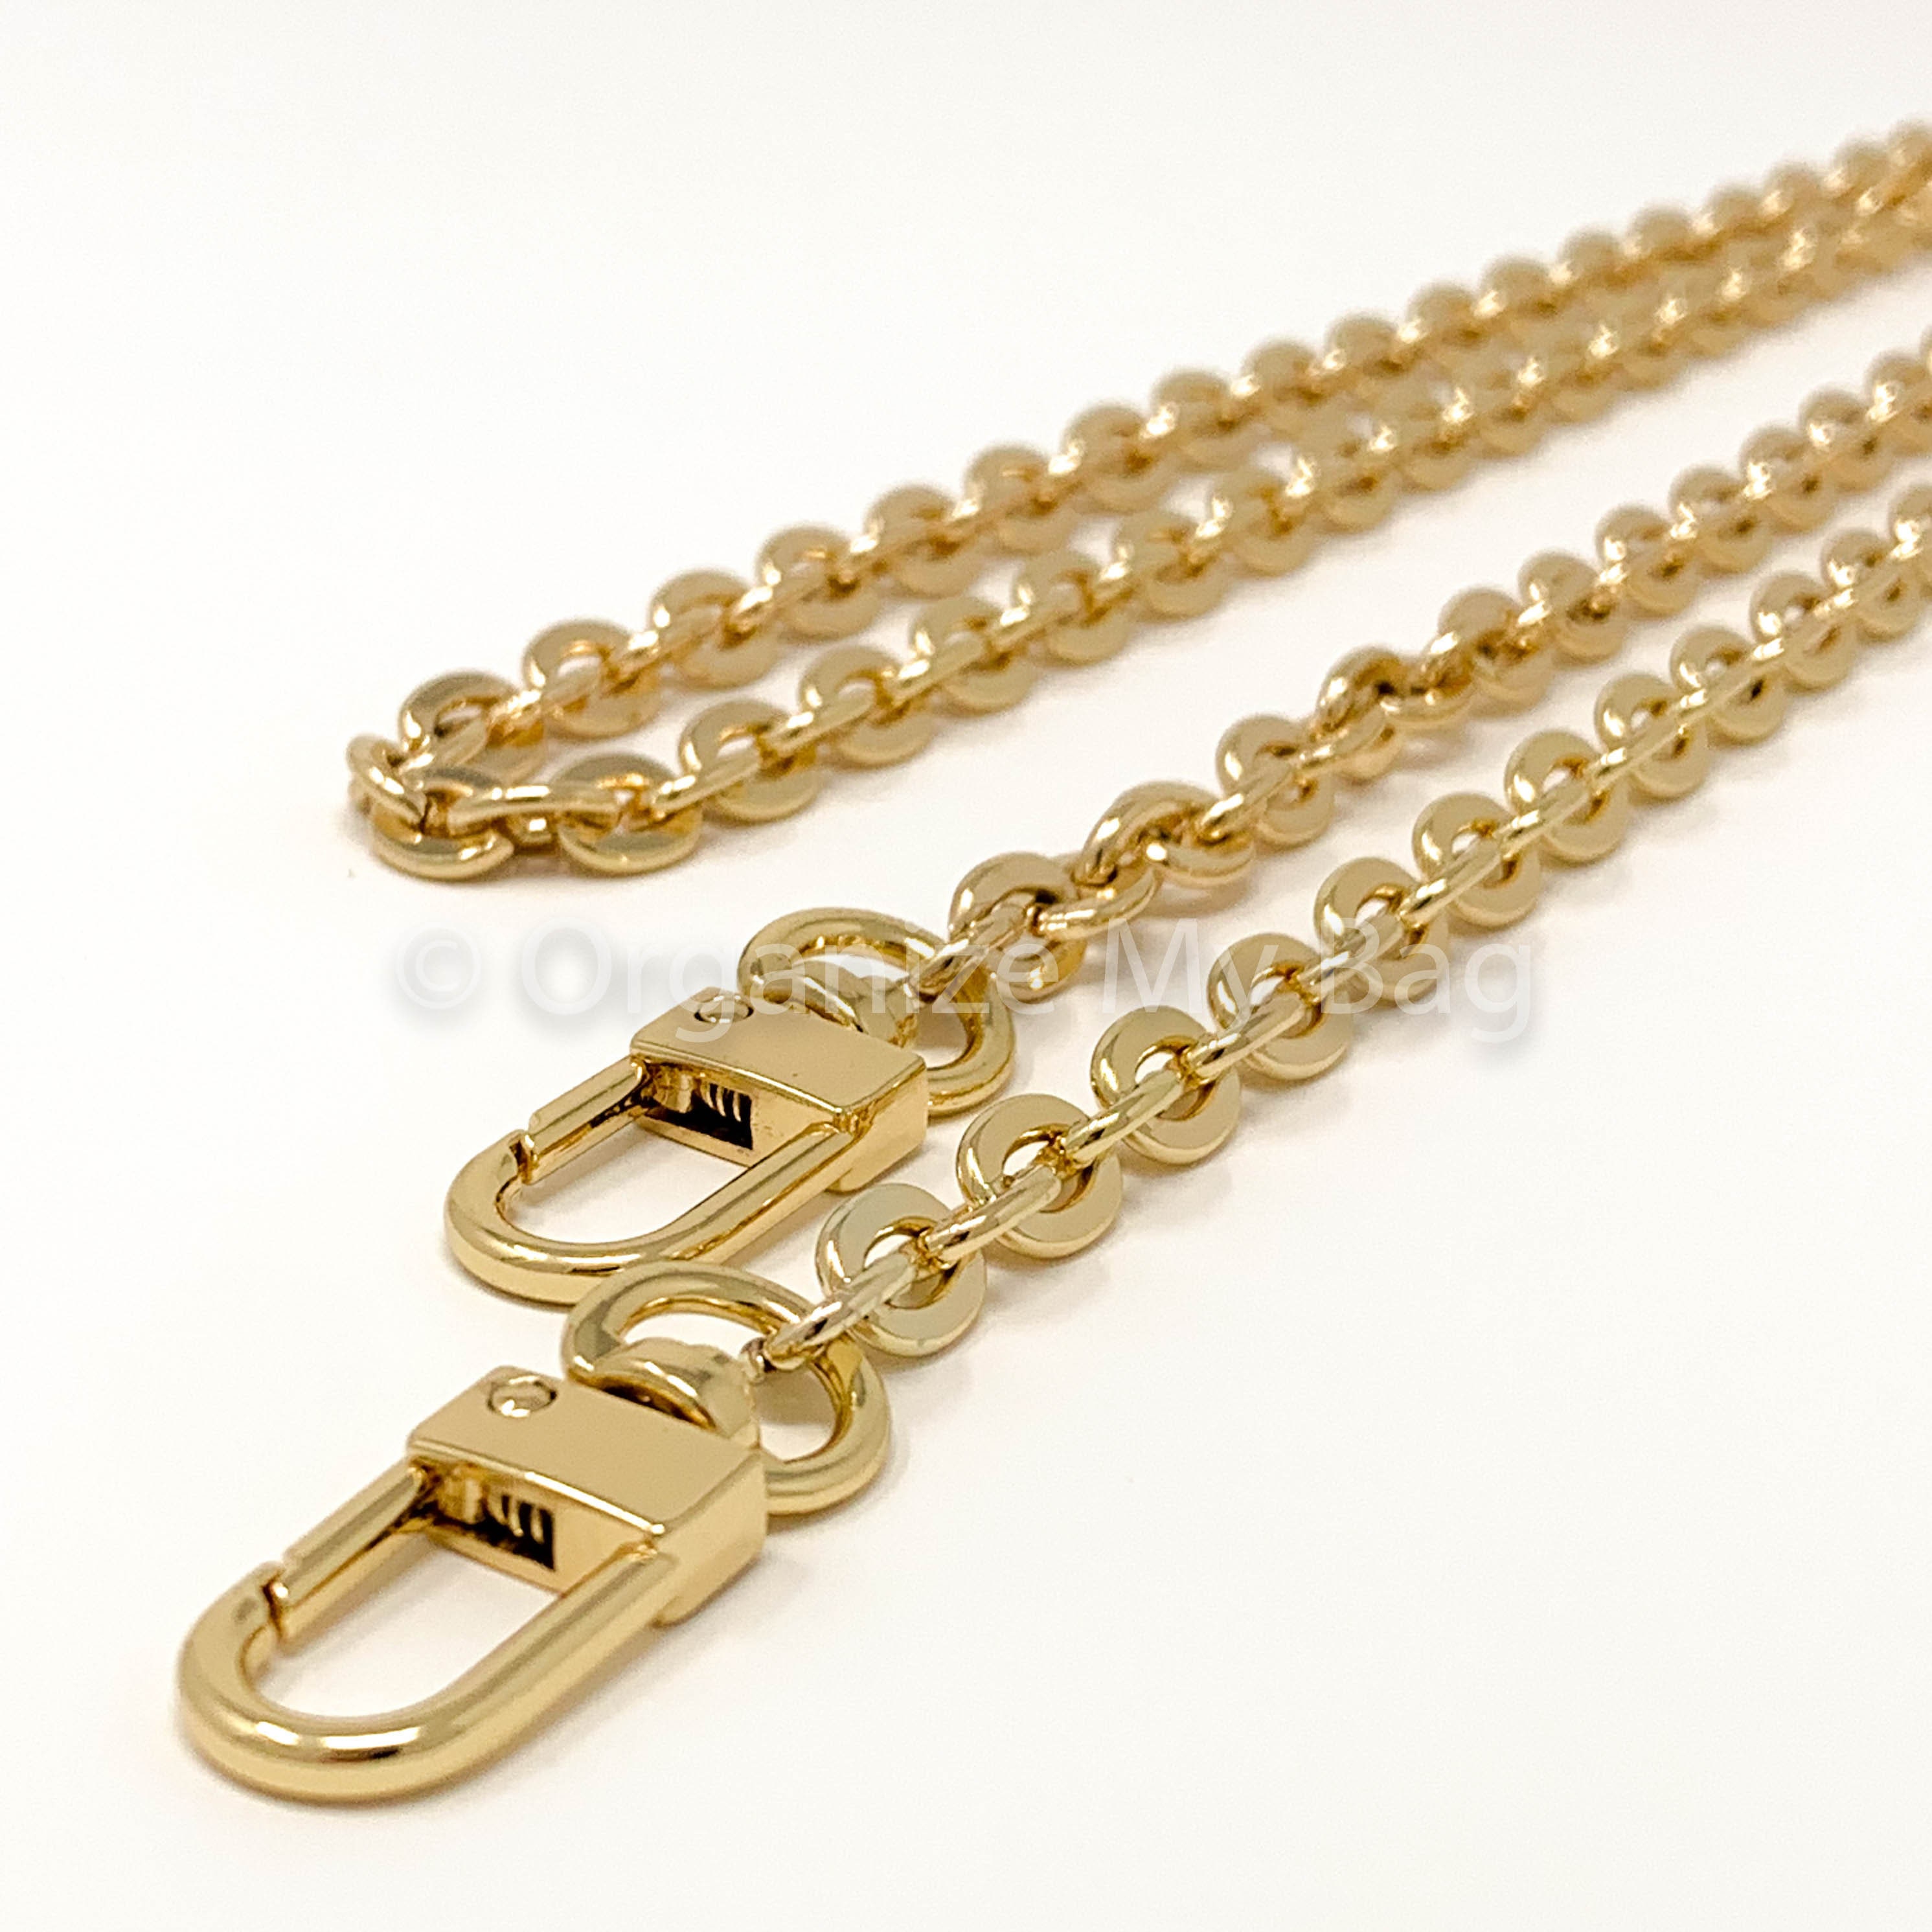 Luxury Heirs Pro LV Crossbody Purse w/ Gold Chain